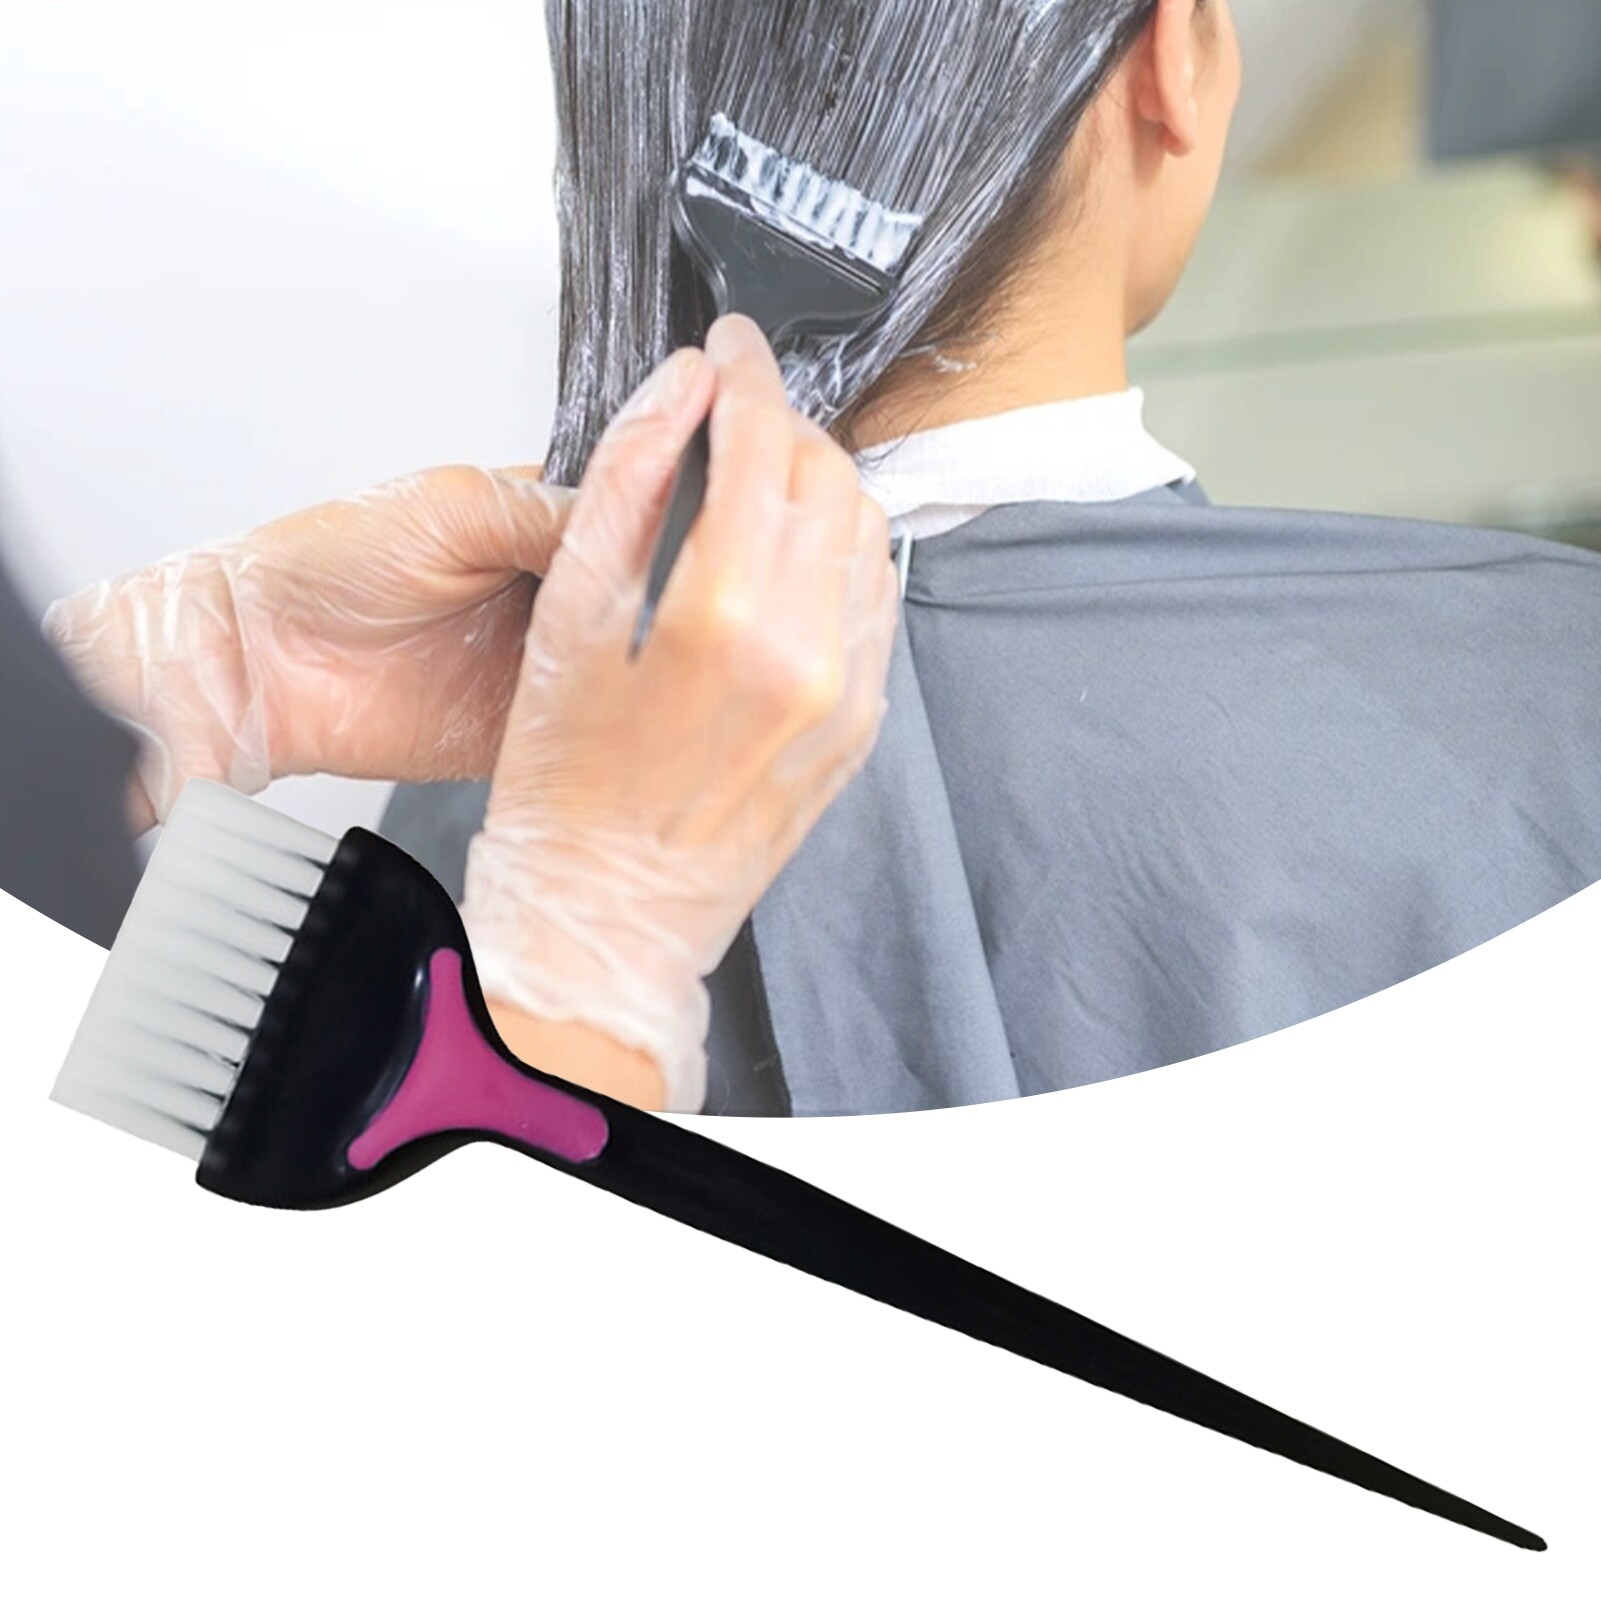 Ready】Hair Dye Brush Eco-friendly Anti-deform Plastic Hair Tint Colorant  Comb for Barbers Shop | Lazada Singapore